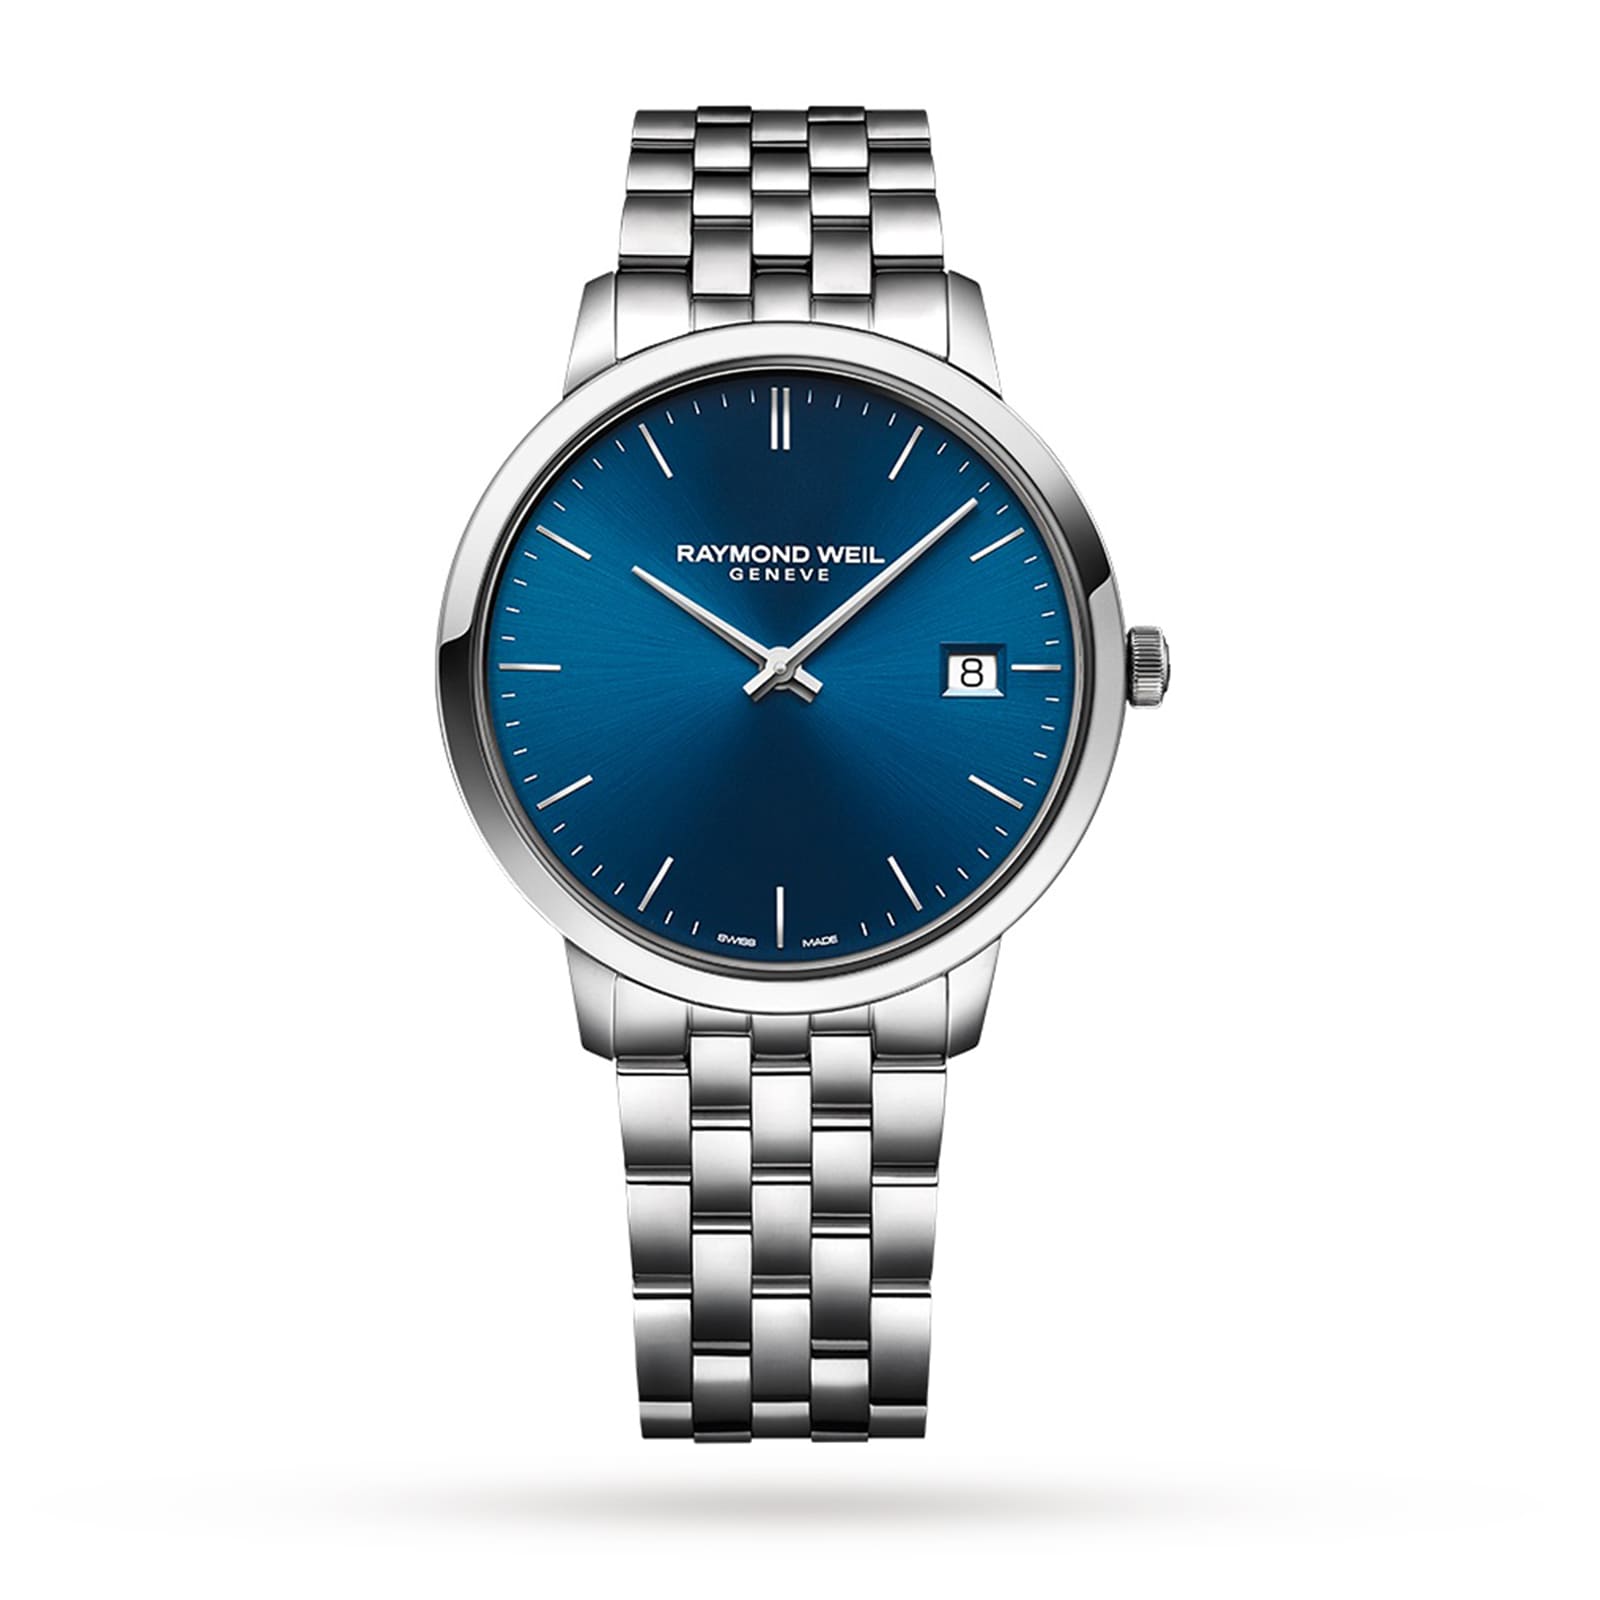 Raymond Weil blue dial watch.